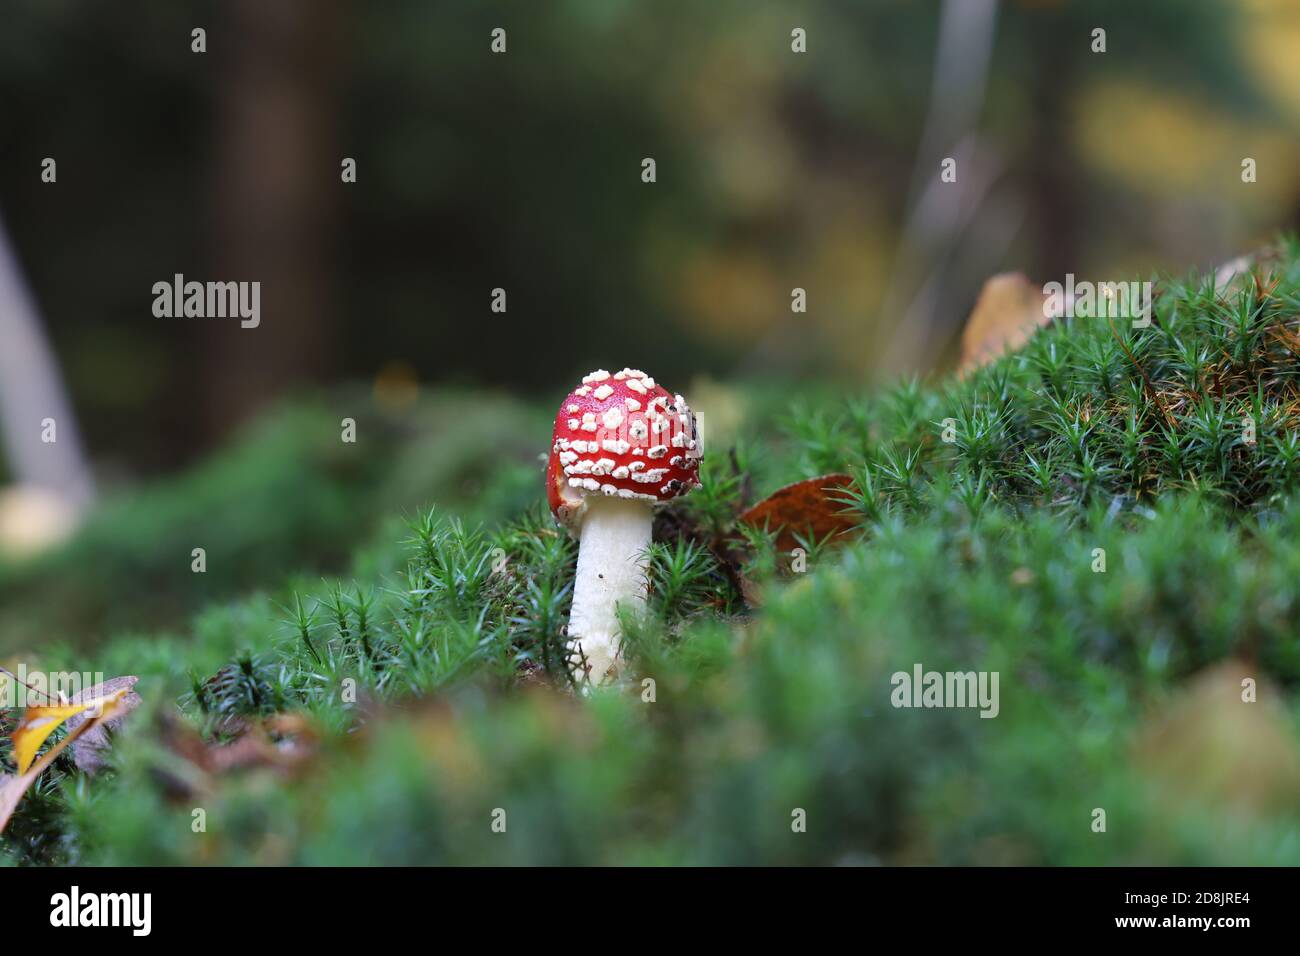 Closeup shot of amanita muscaria mushroom in forest. Stock Photo